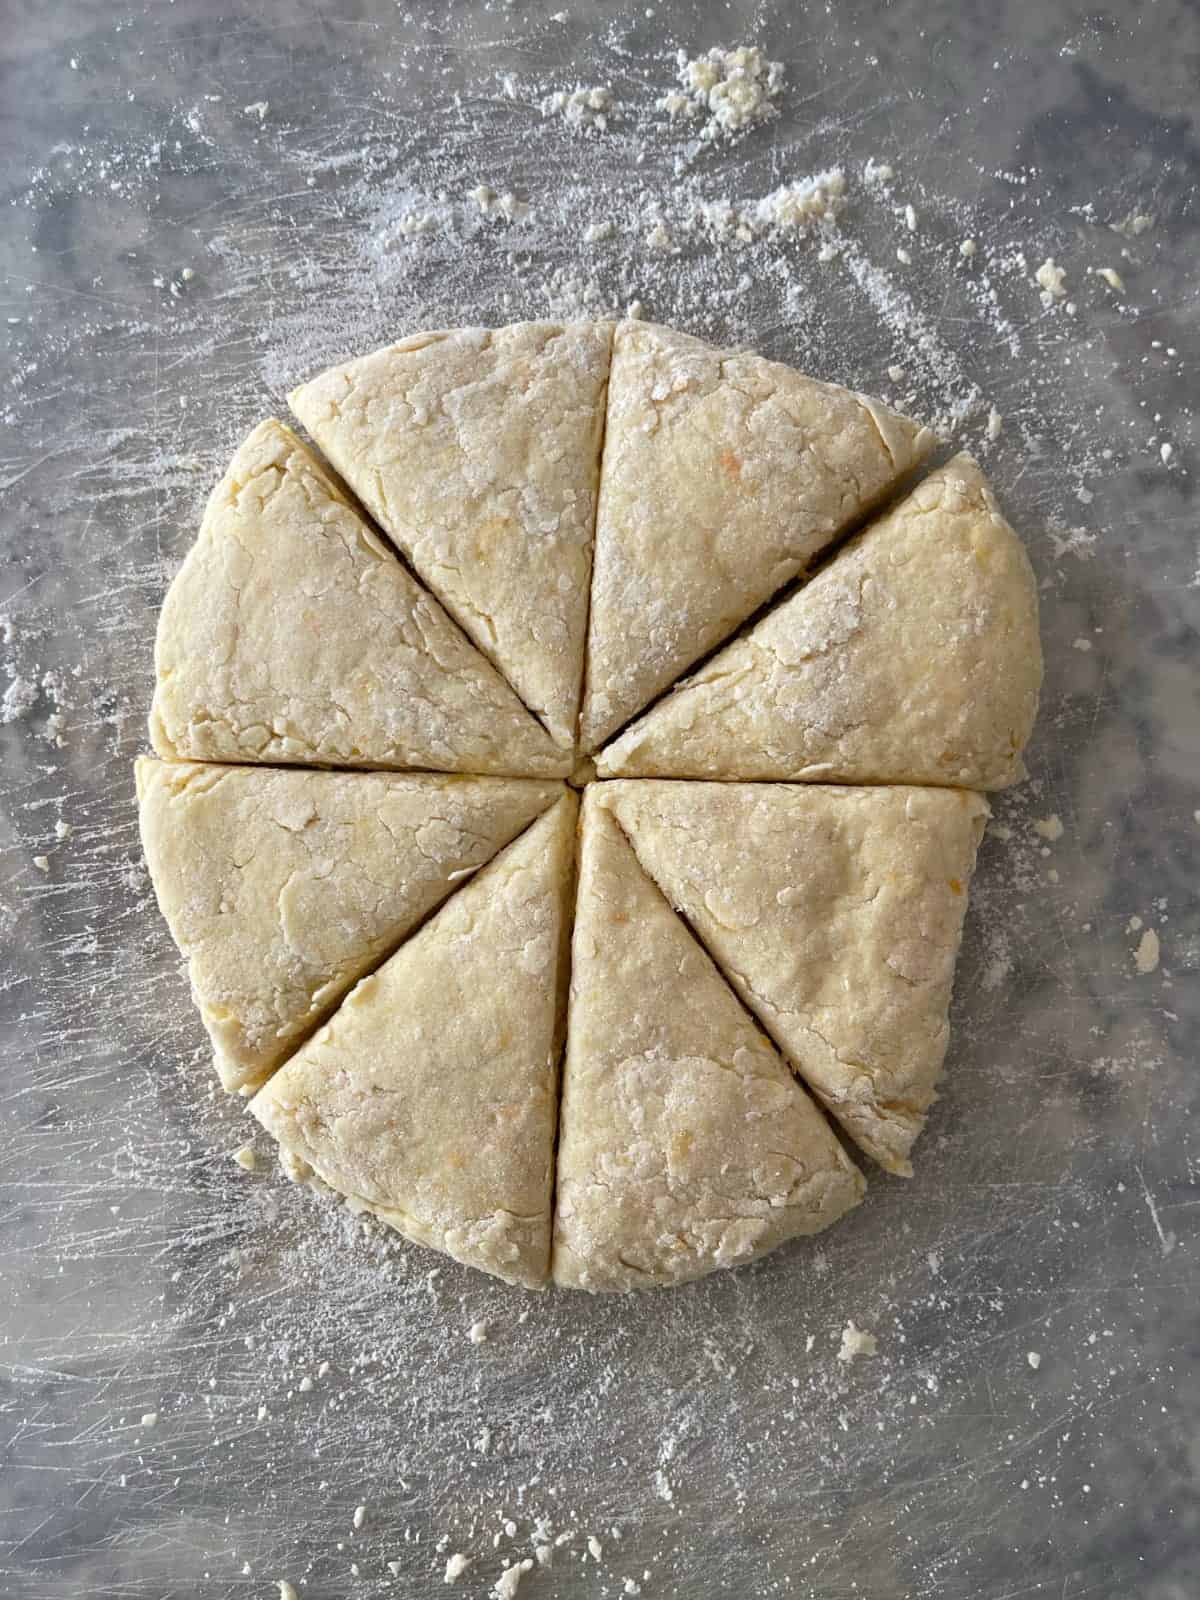 Orange scone dough cut into 8 wedges.